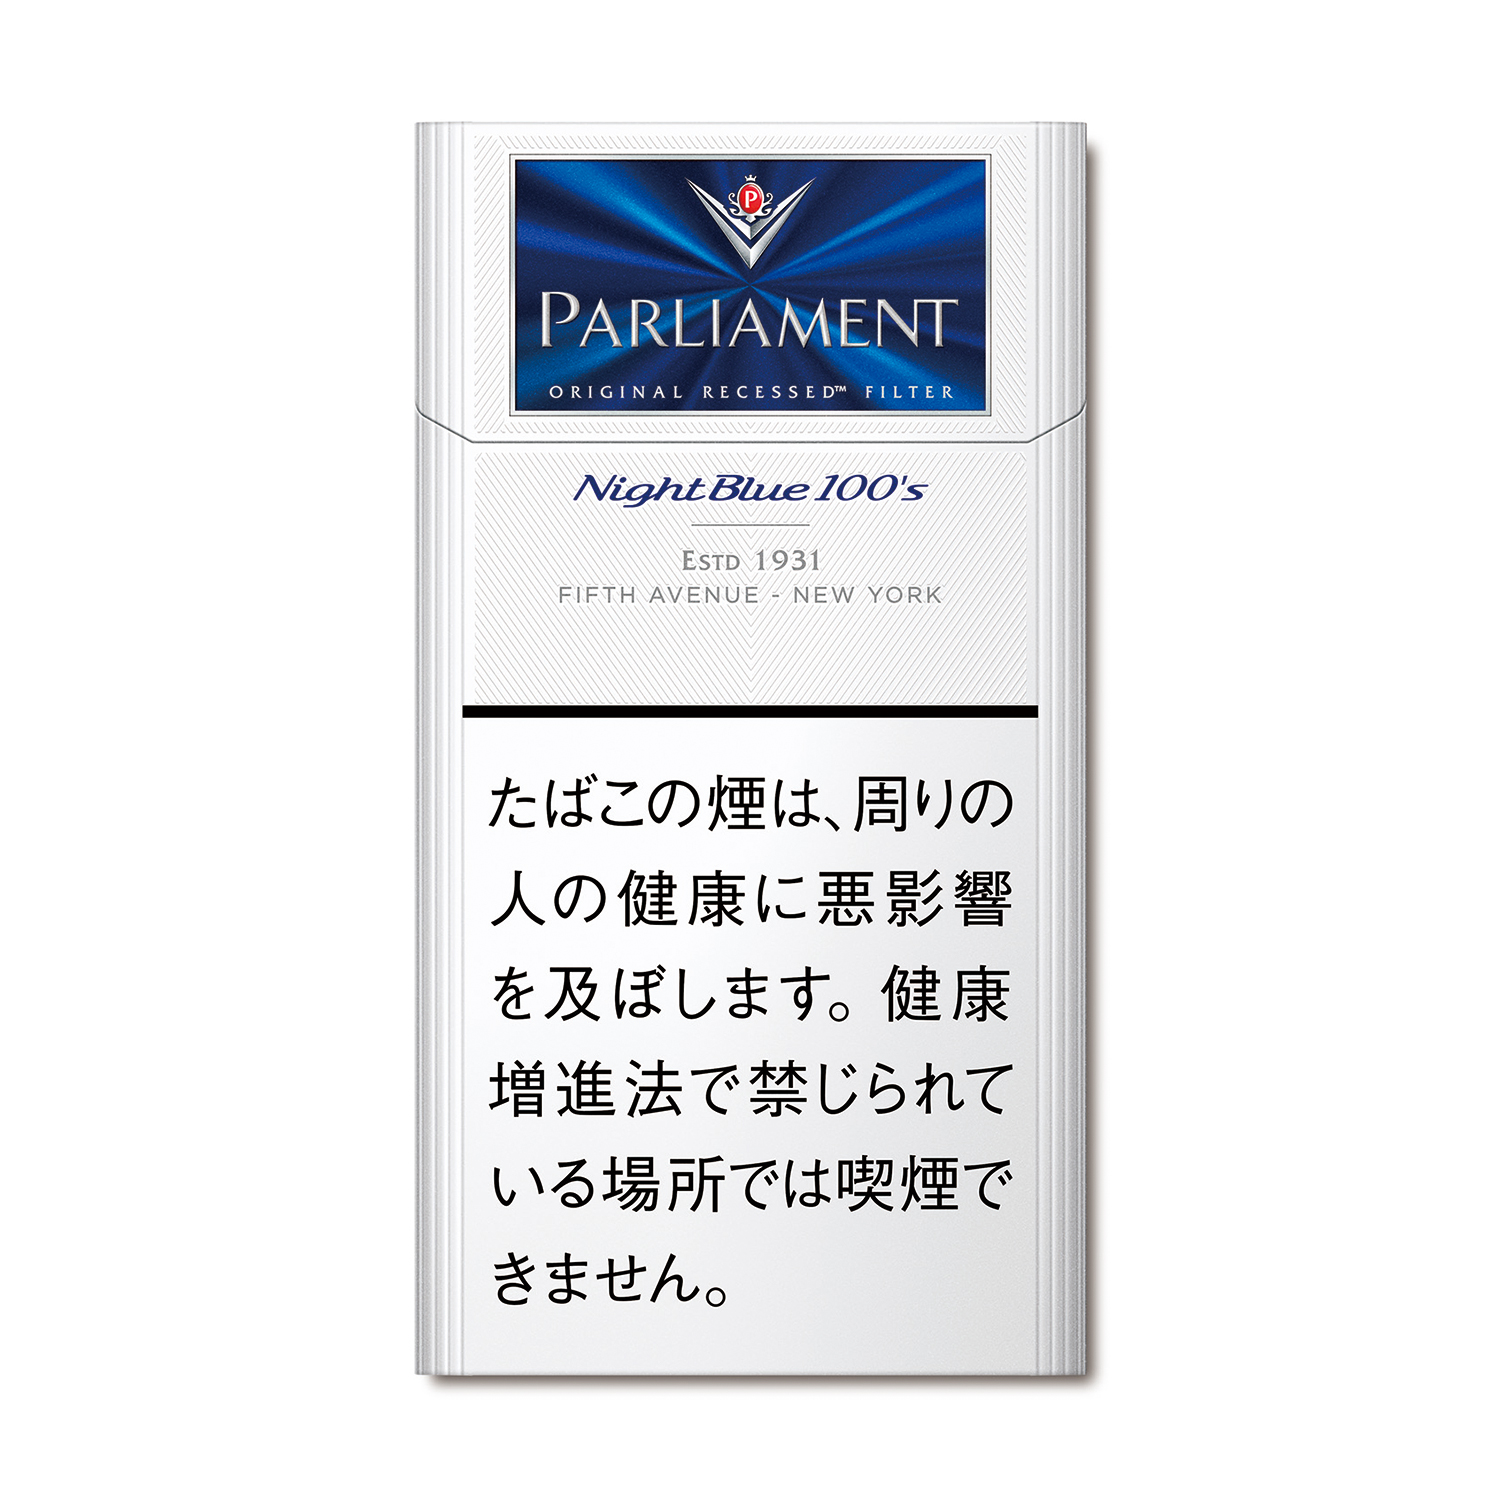 PARLIAMENT NIGHT BLUE 100 BOX / Tar:9mg Nicotine:0.7mg